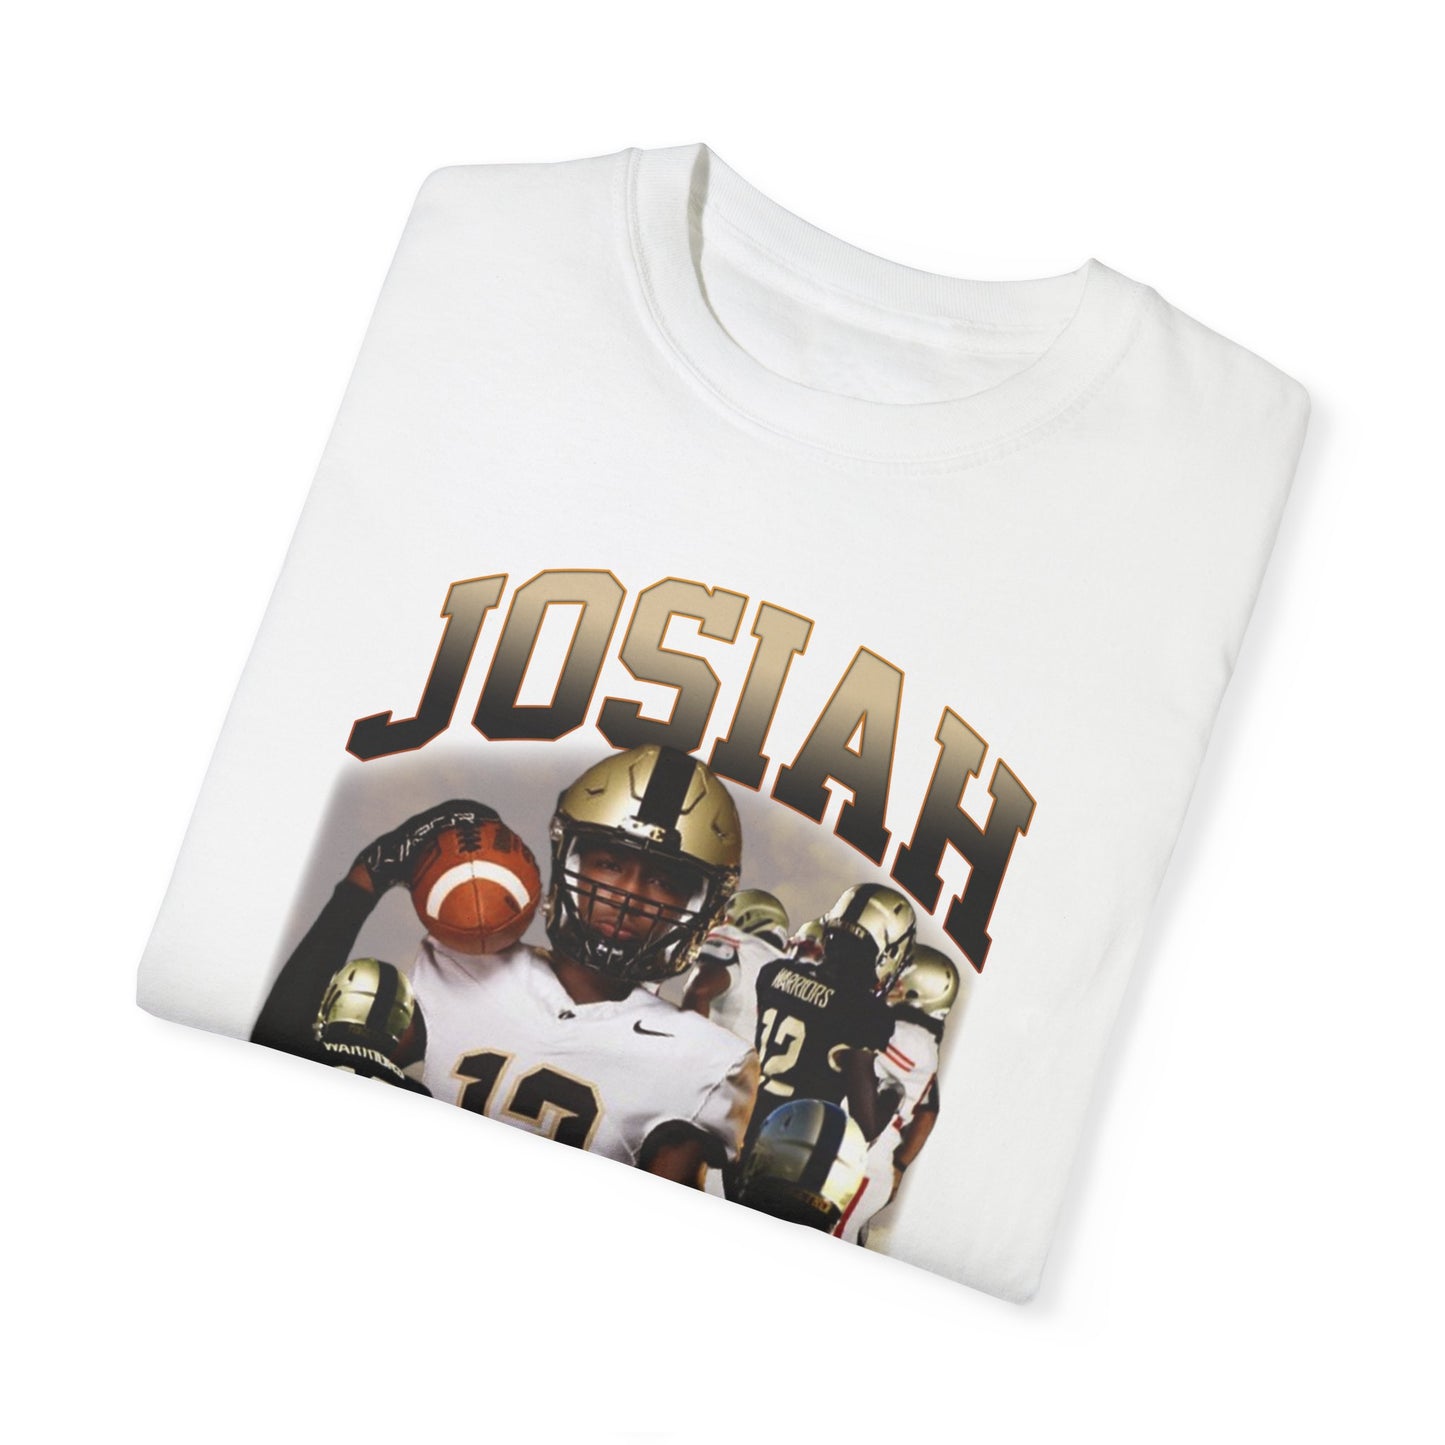 Josiah Rand Graphic T-shirt